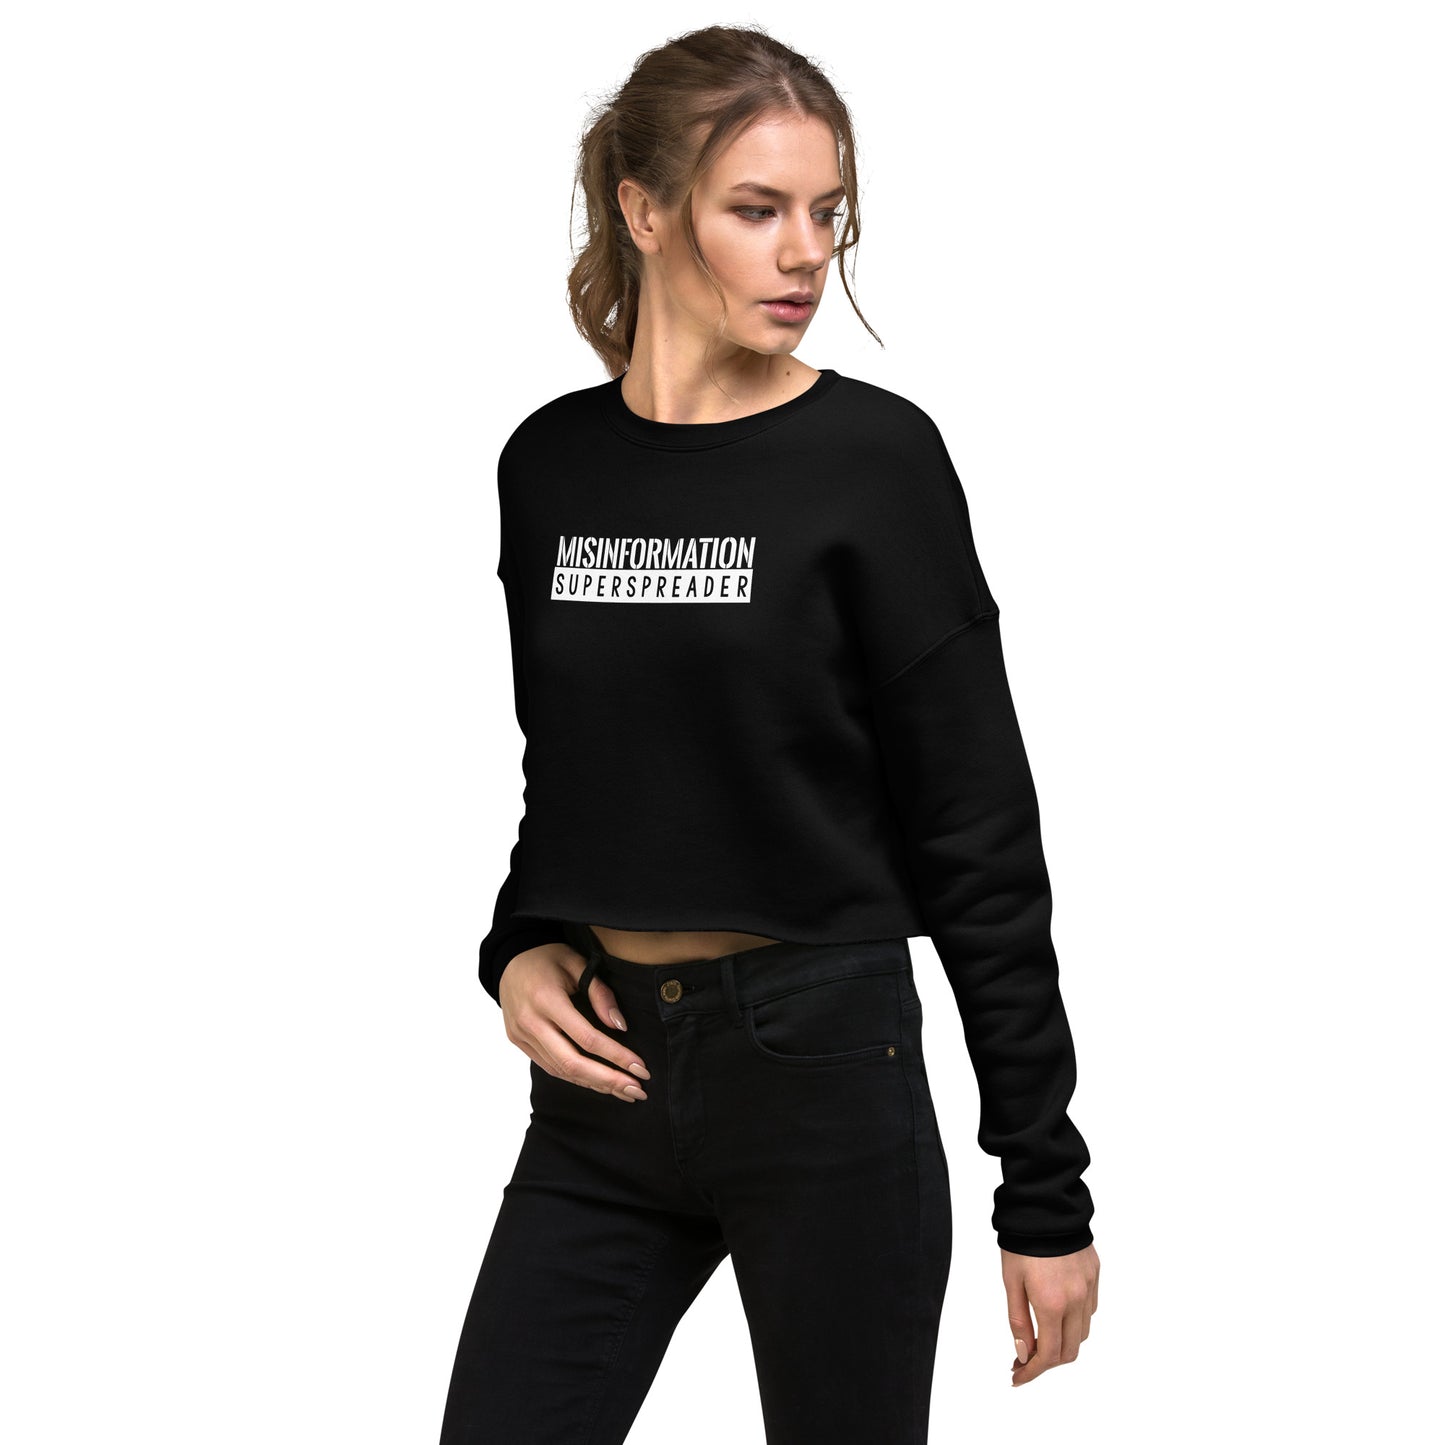 Misinformation Superspreader Crop Sweatshirt (Black)